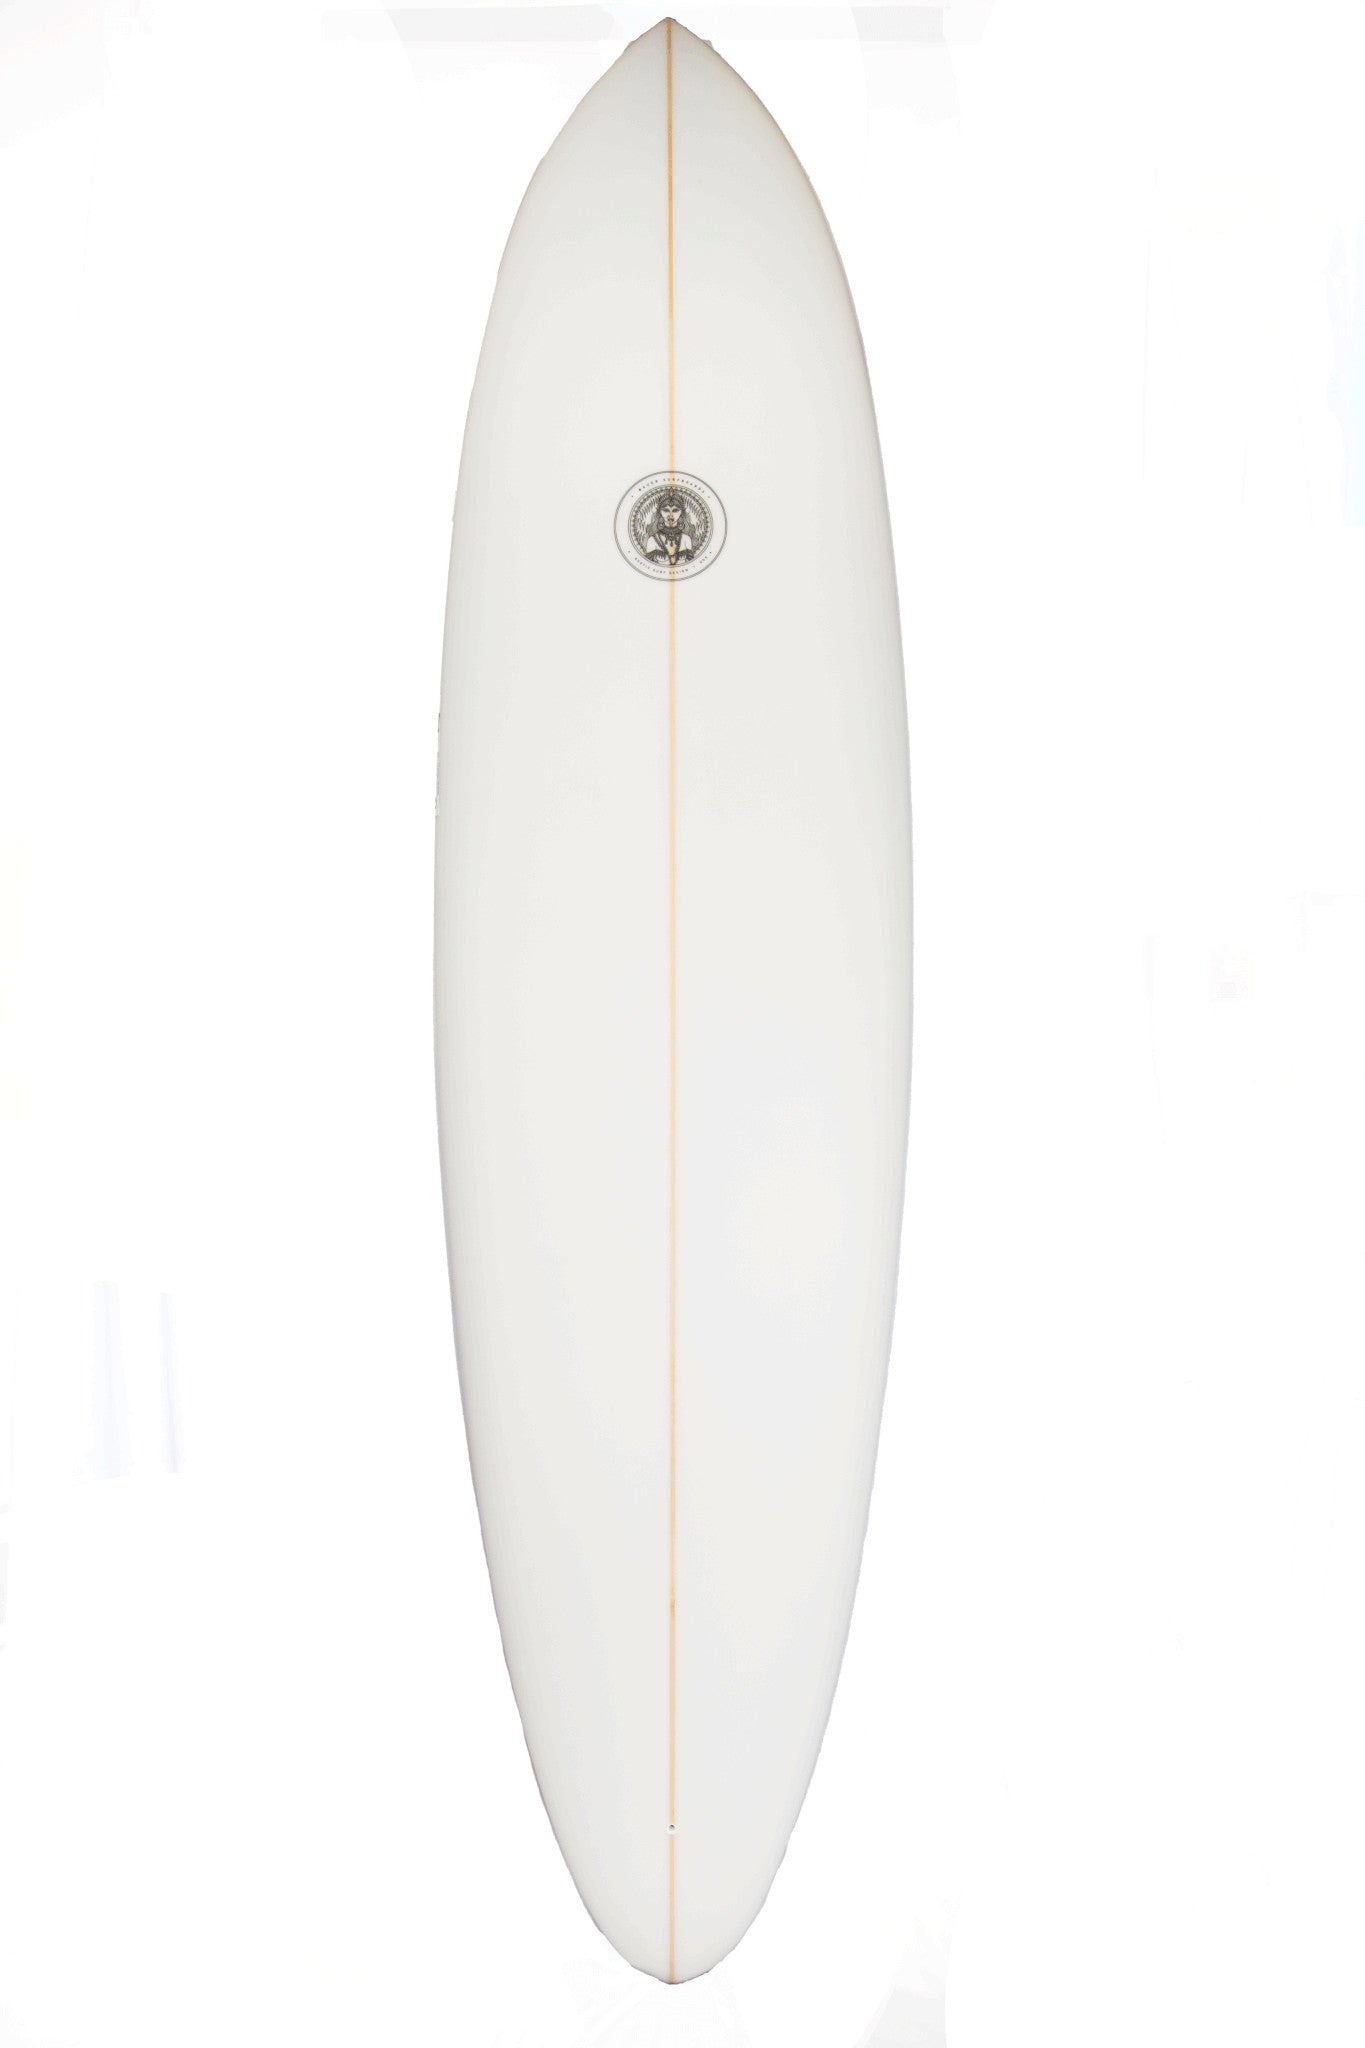 7'4" Bauer Surfboards Spicoli Pro Speed Egg